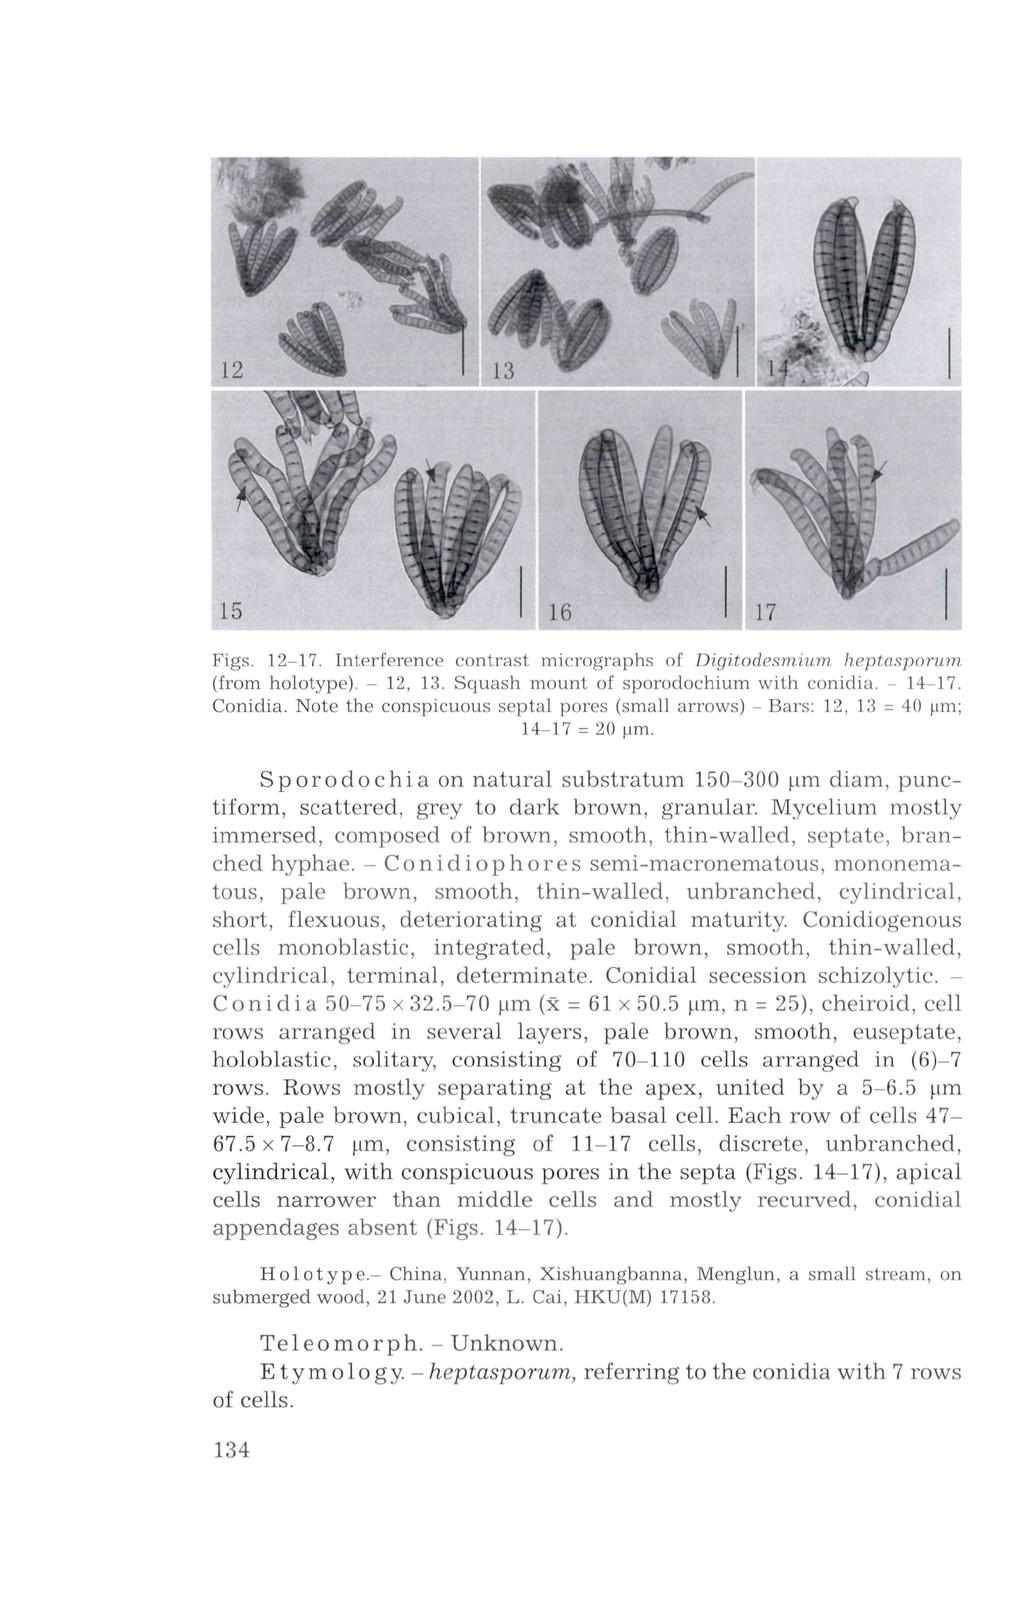 15 17 Figs. 12-17. Interference contrast micrographs of Digitodesmium heptasporum (from holotype). - 12, 13. Squash mount of sporodochium with conidia. - 14-17. Conidia.